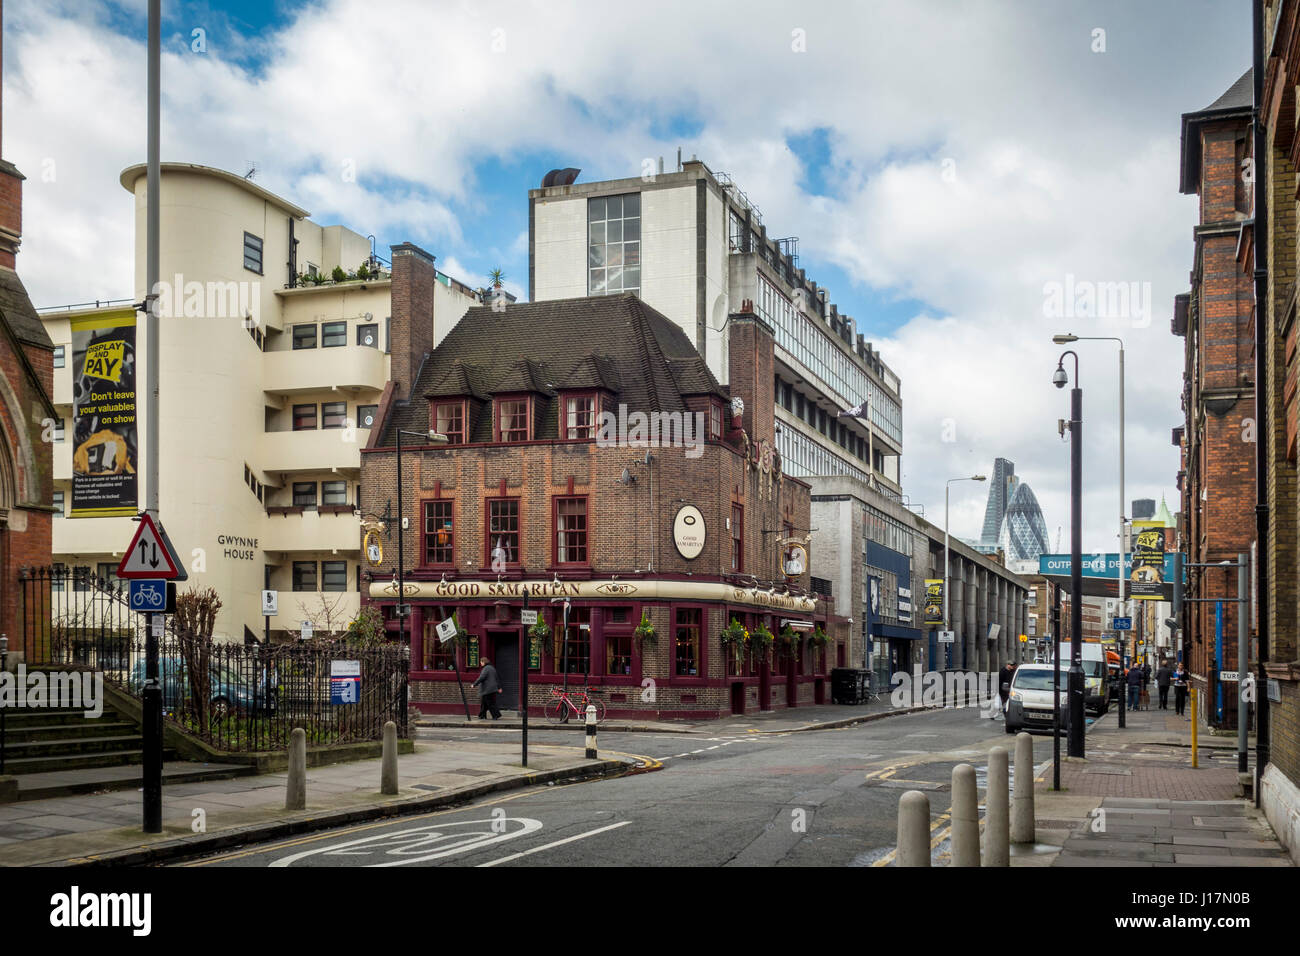 Good Samaritan pub public house, Turner Street, Whitechapel, London, UK Stock Photo